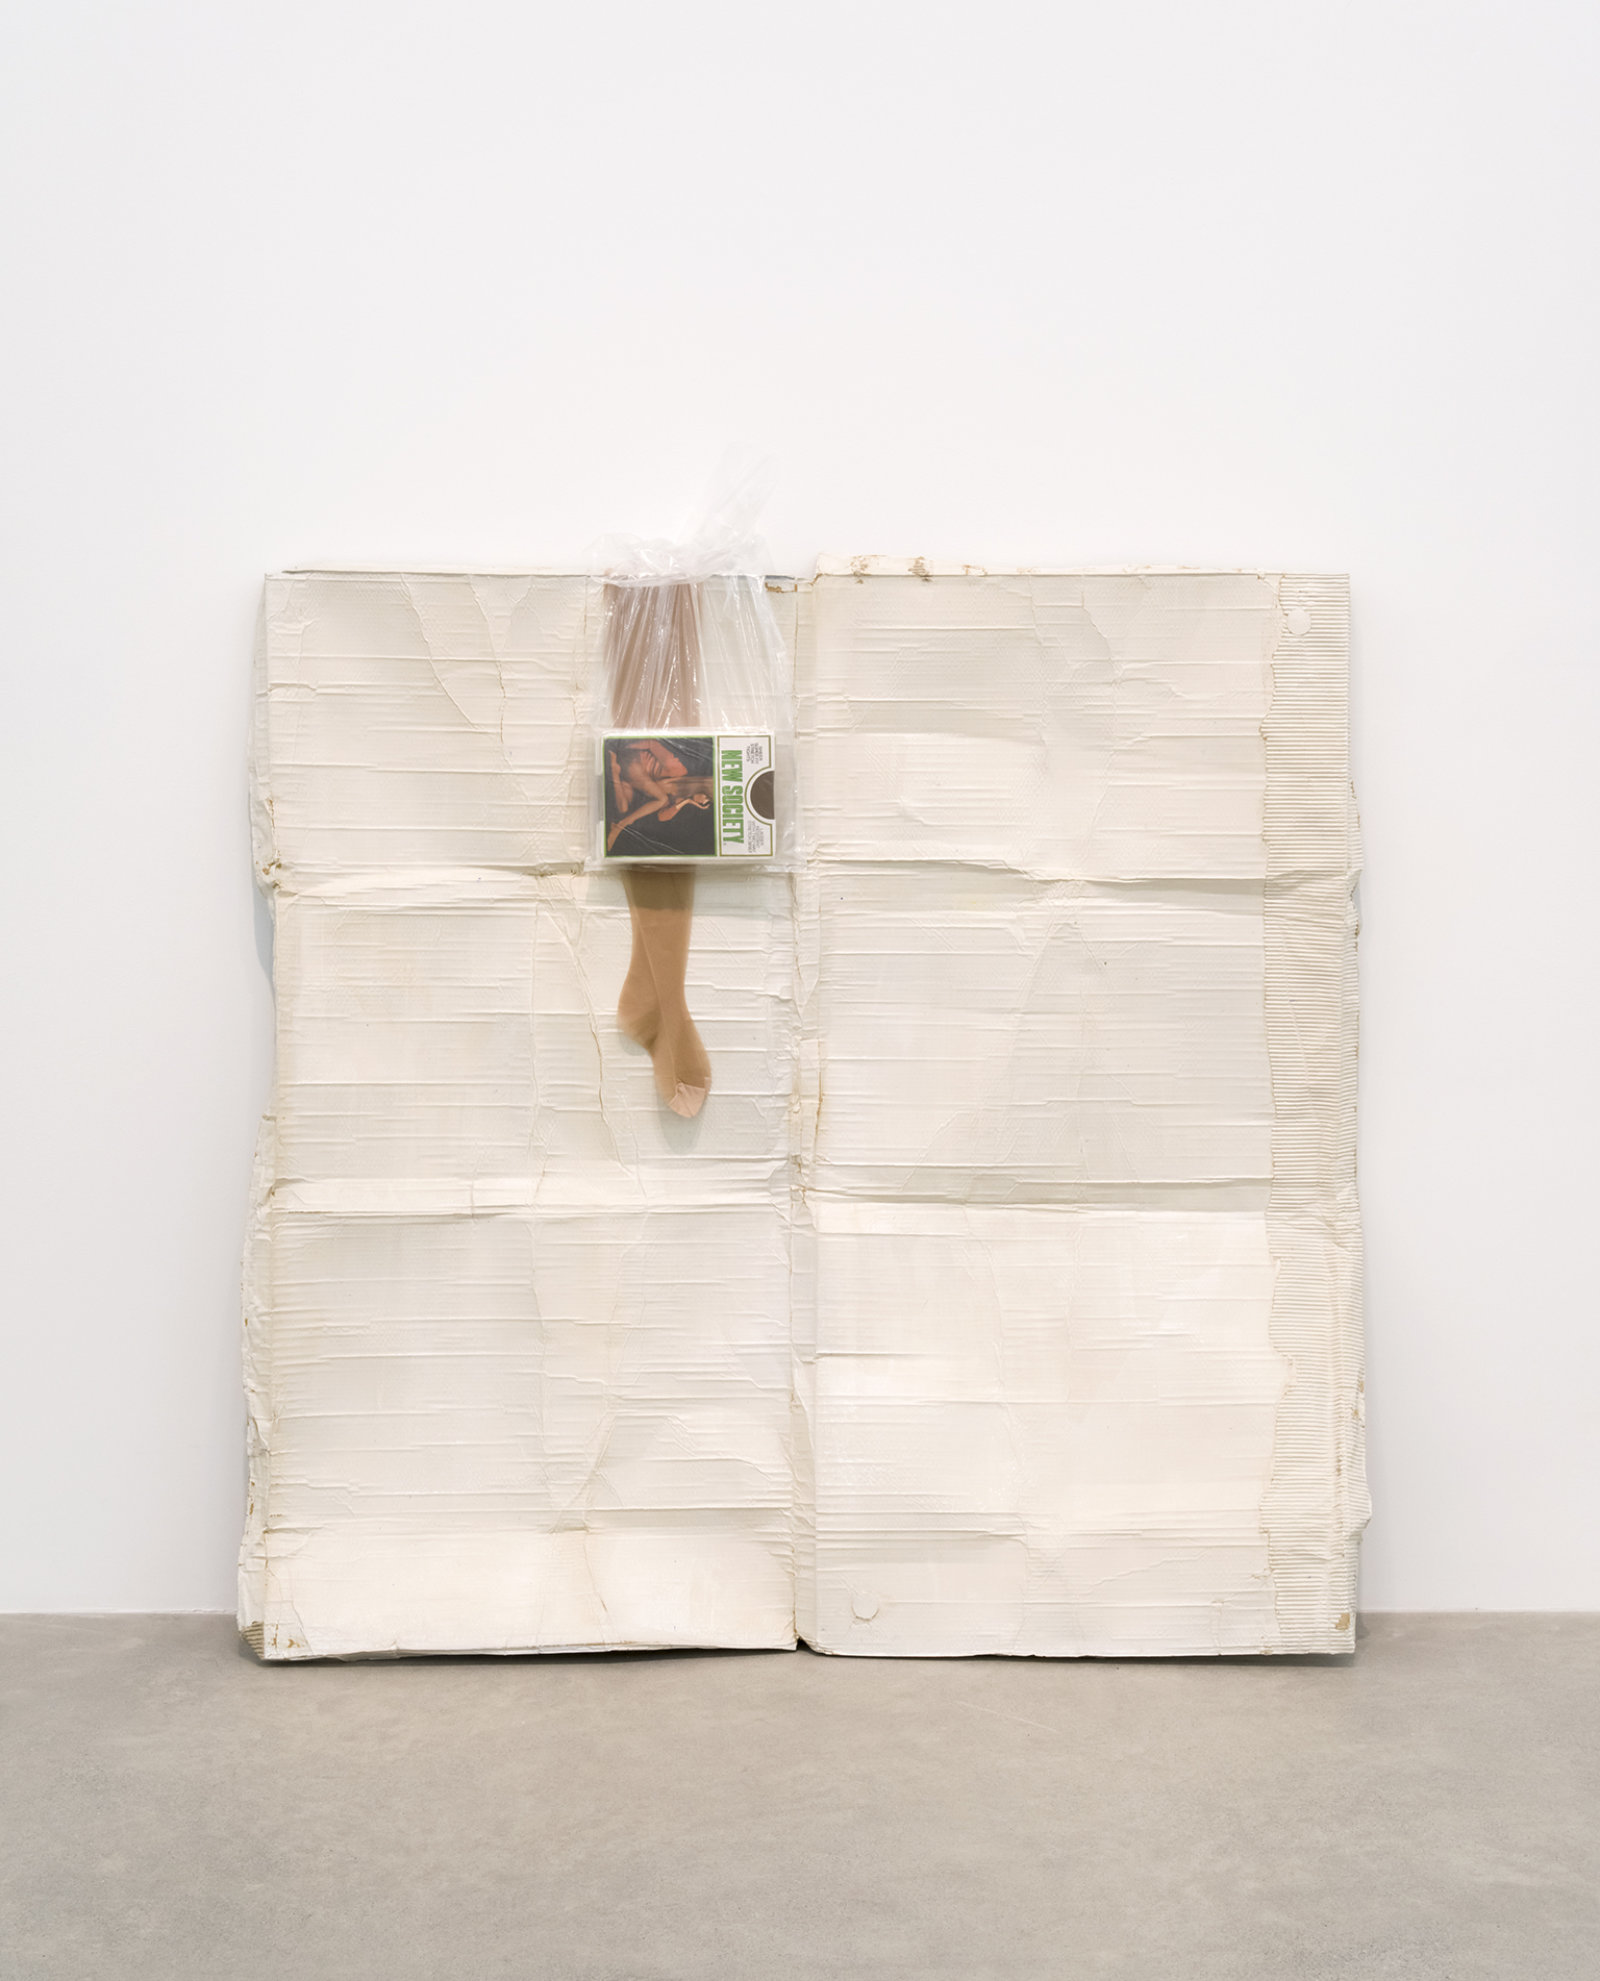 Liz Magor, New Society, 2016, polymerized gypsum, plastic bag, nylon stockings, 66 x 61 x 12 in. (168 x 155 x 30 cm)